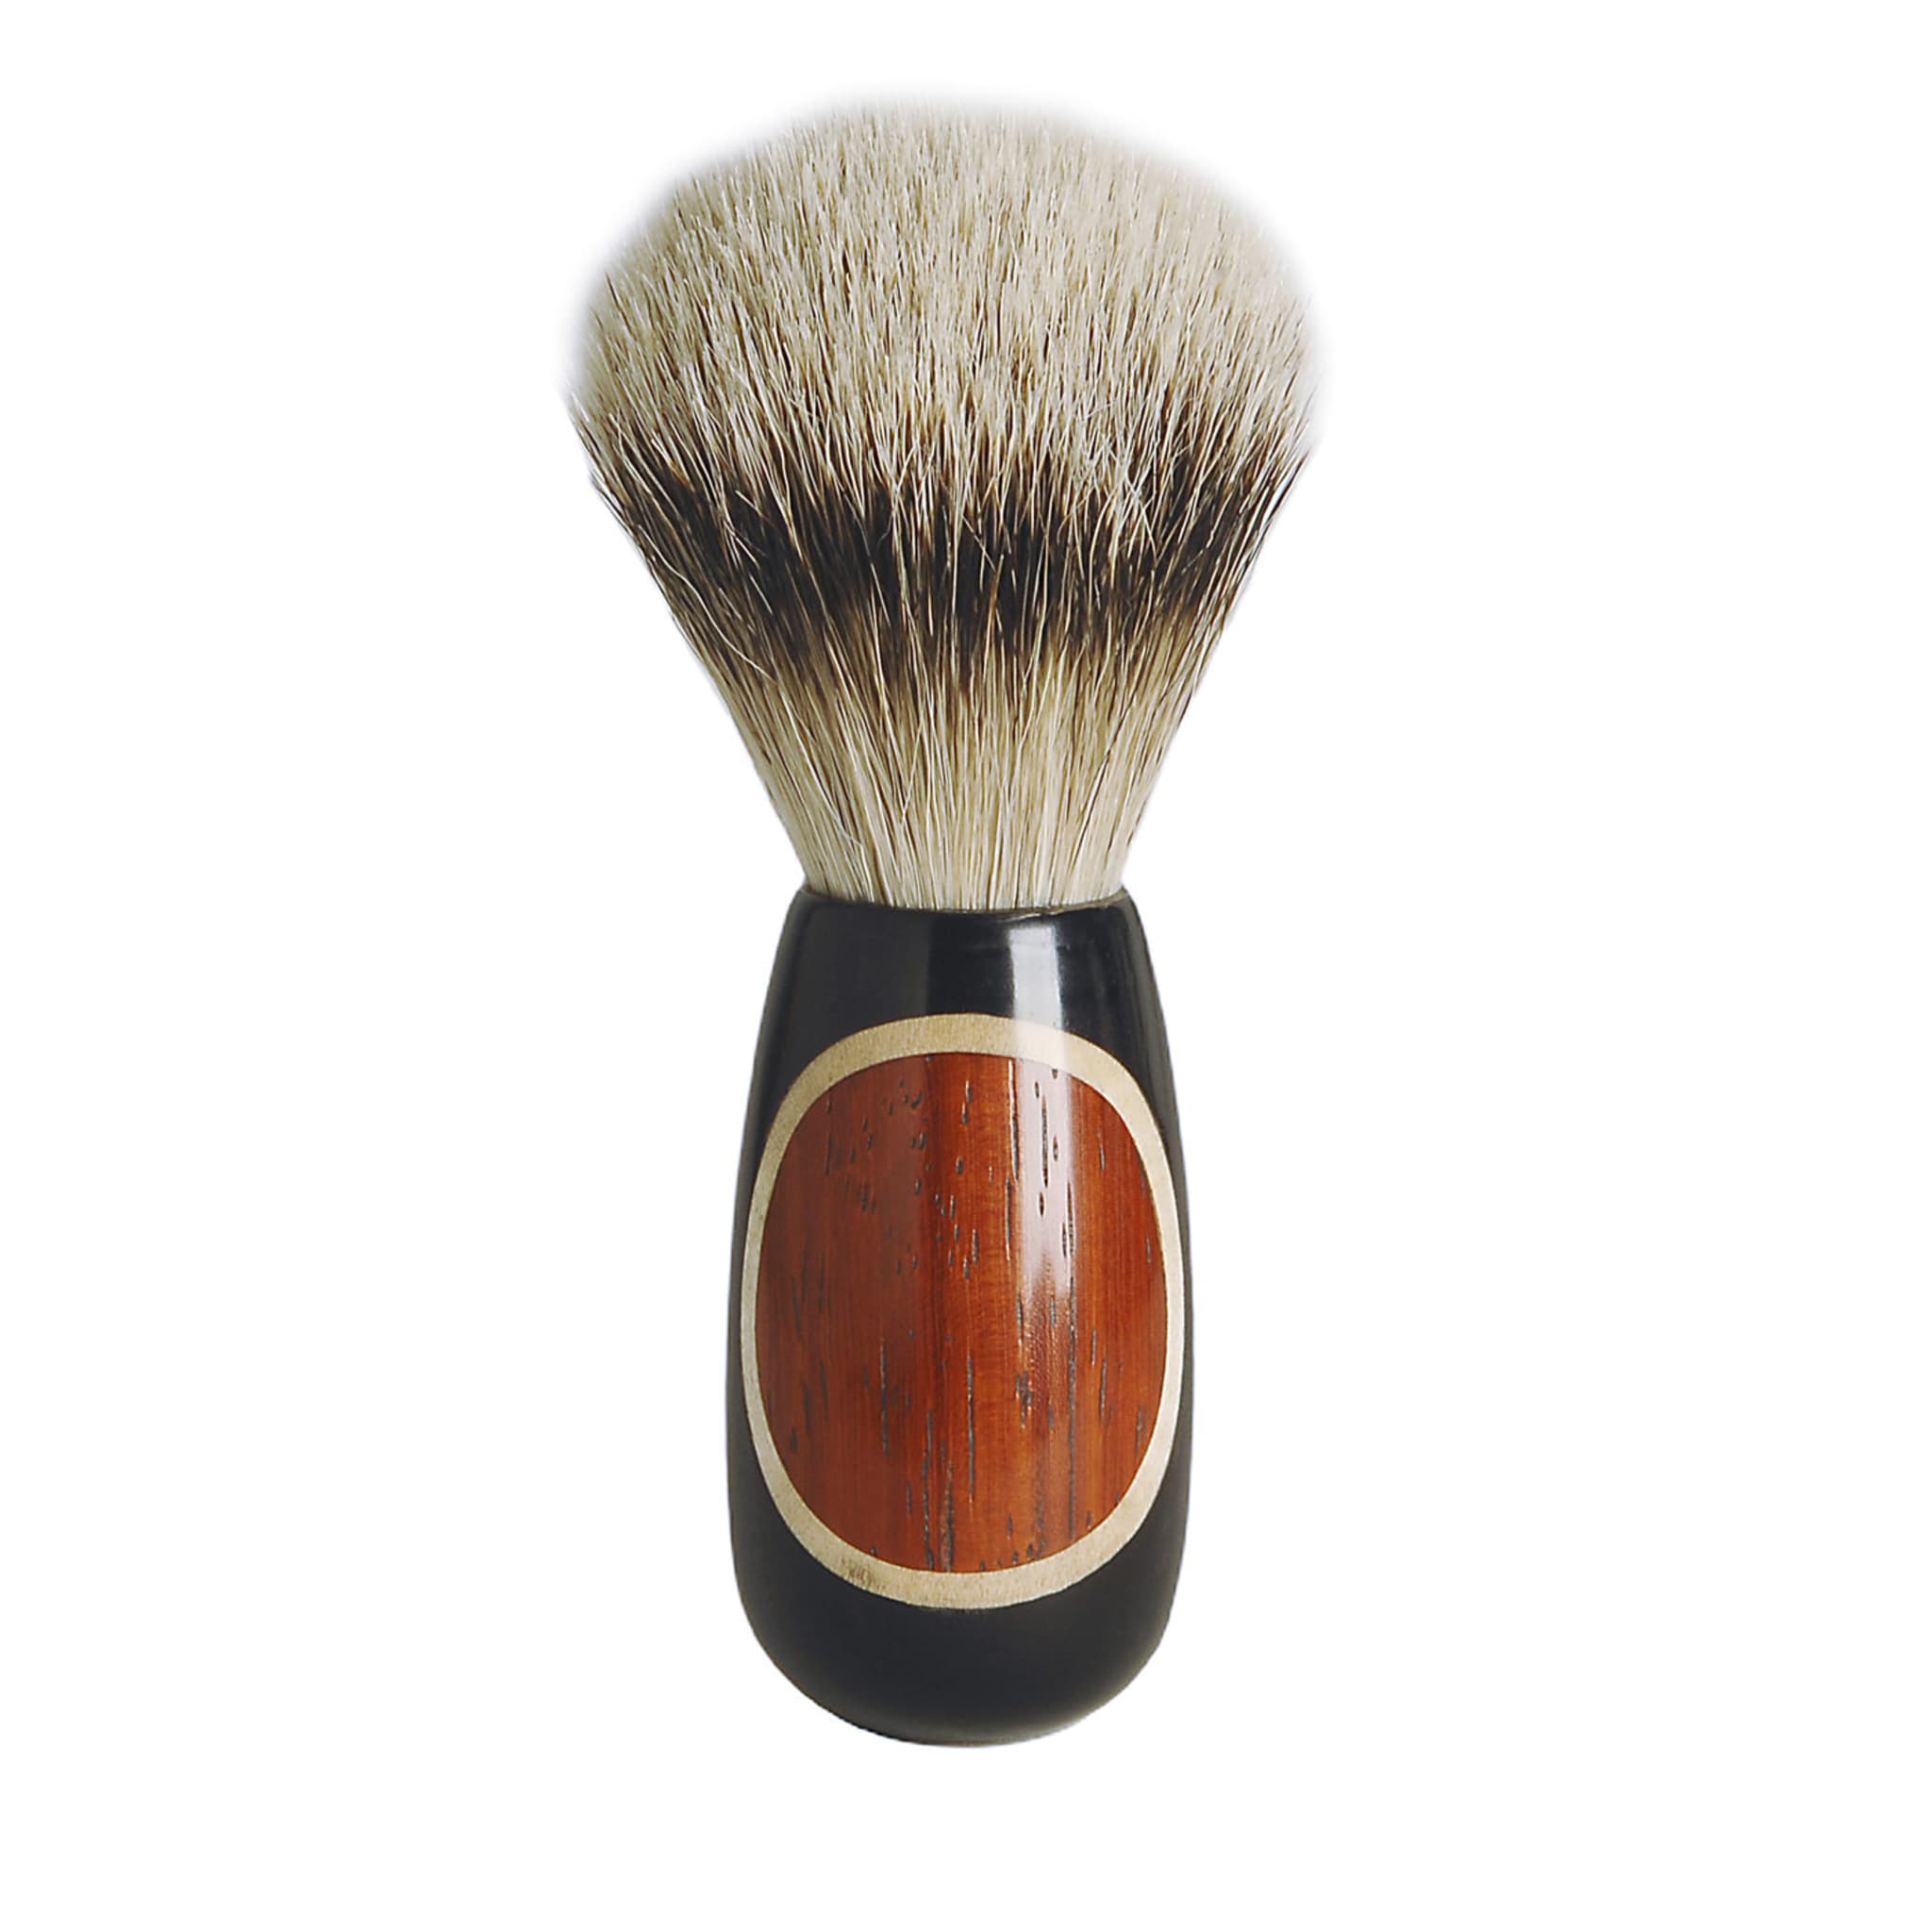 Oval Shaving Brush in Ebony, Padauk and Maple Wood - Main view